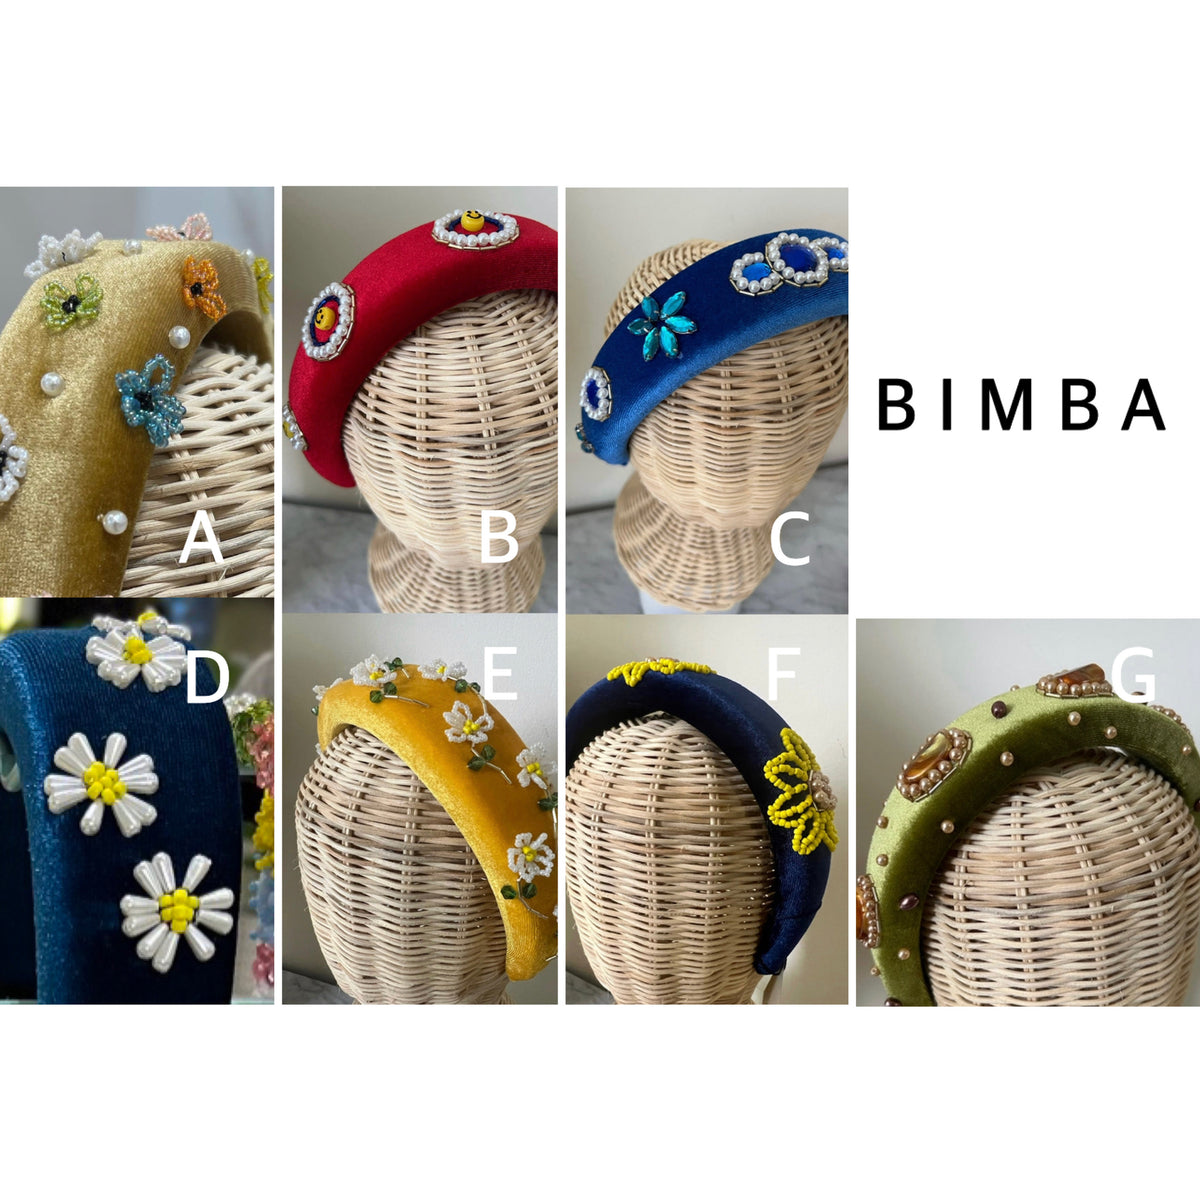 Bimba Embroidered Headbands (Enter code “bimba15” to get 15% off)